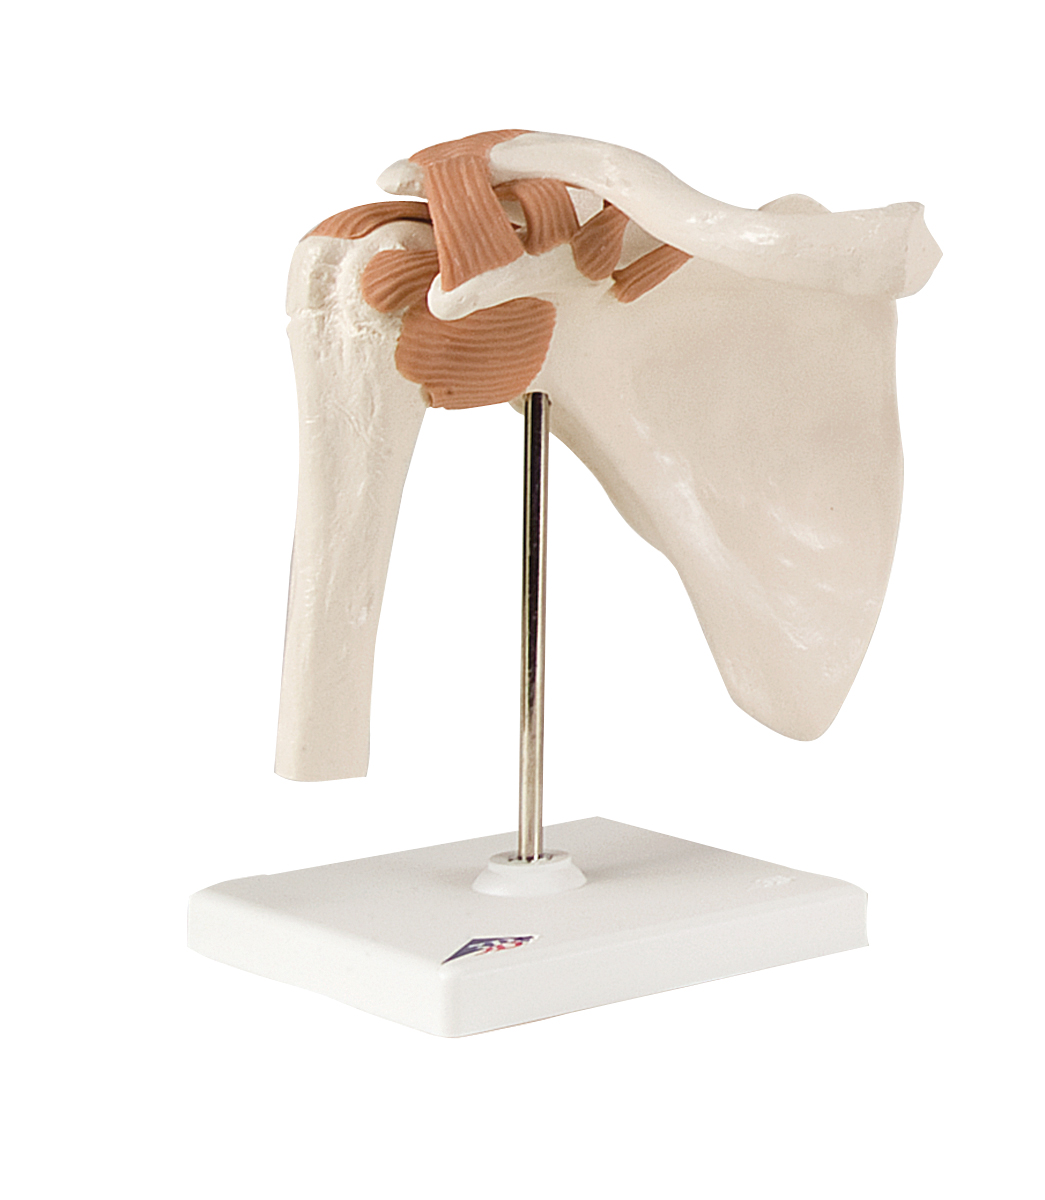 Picture of Fabrication Enterprises 12-4509 Anatomical Model - Functional Shoulder Joint